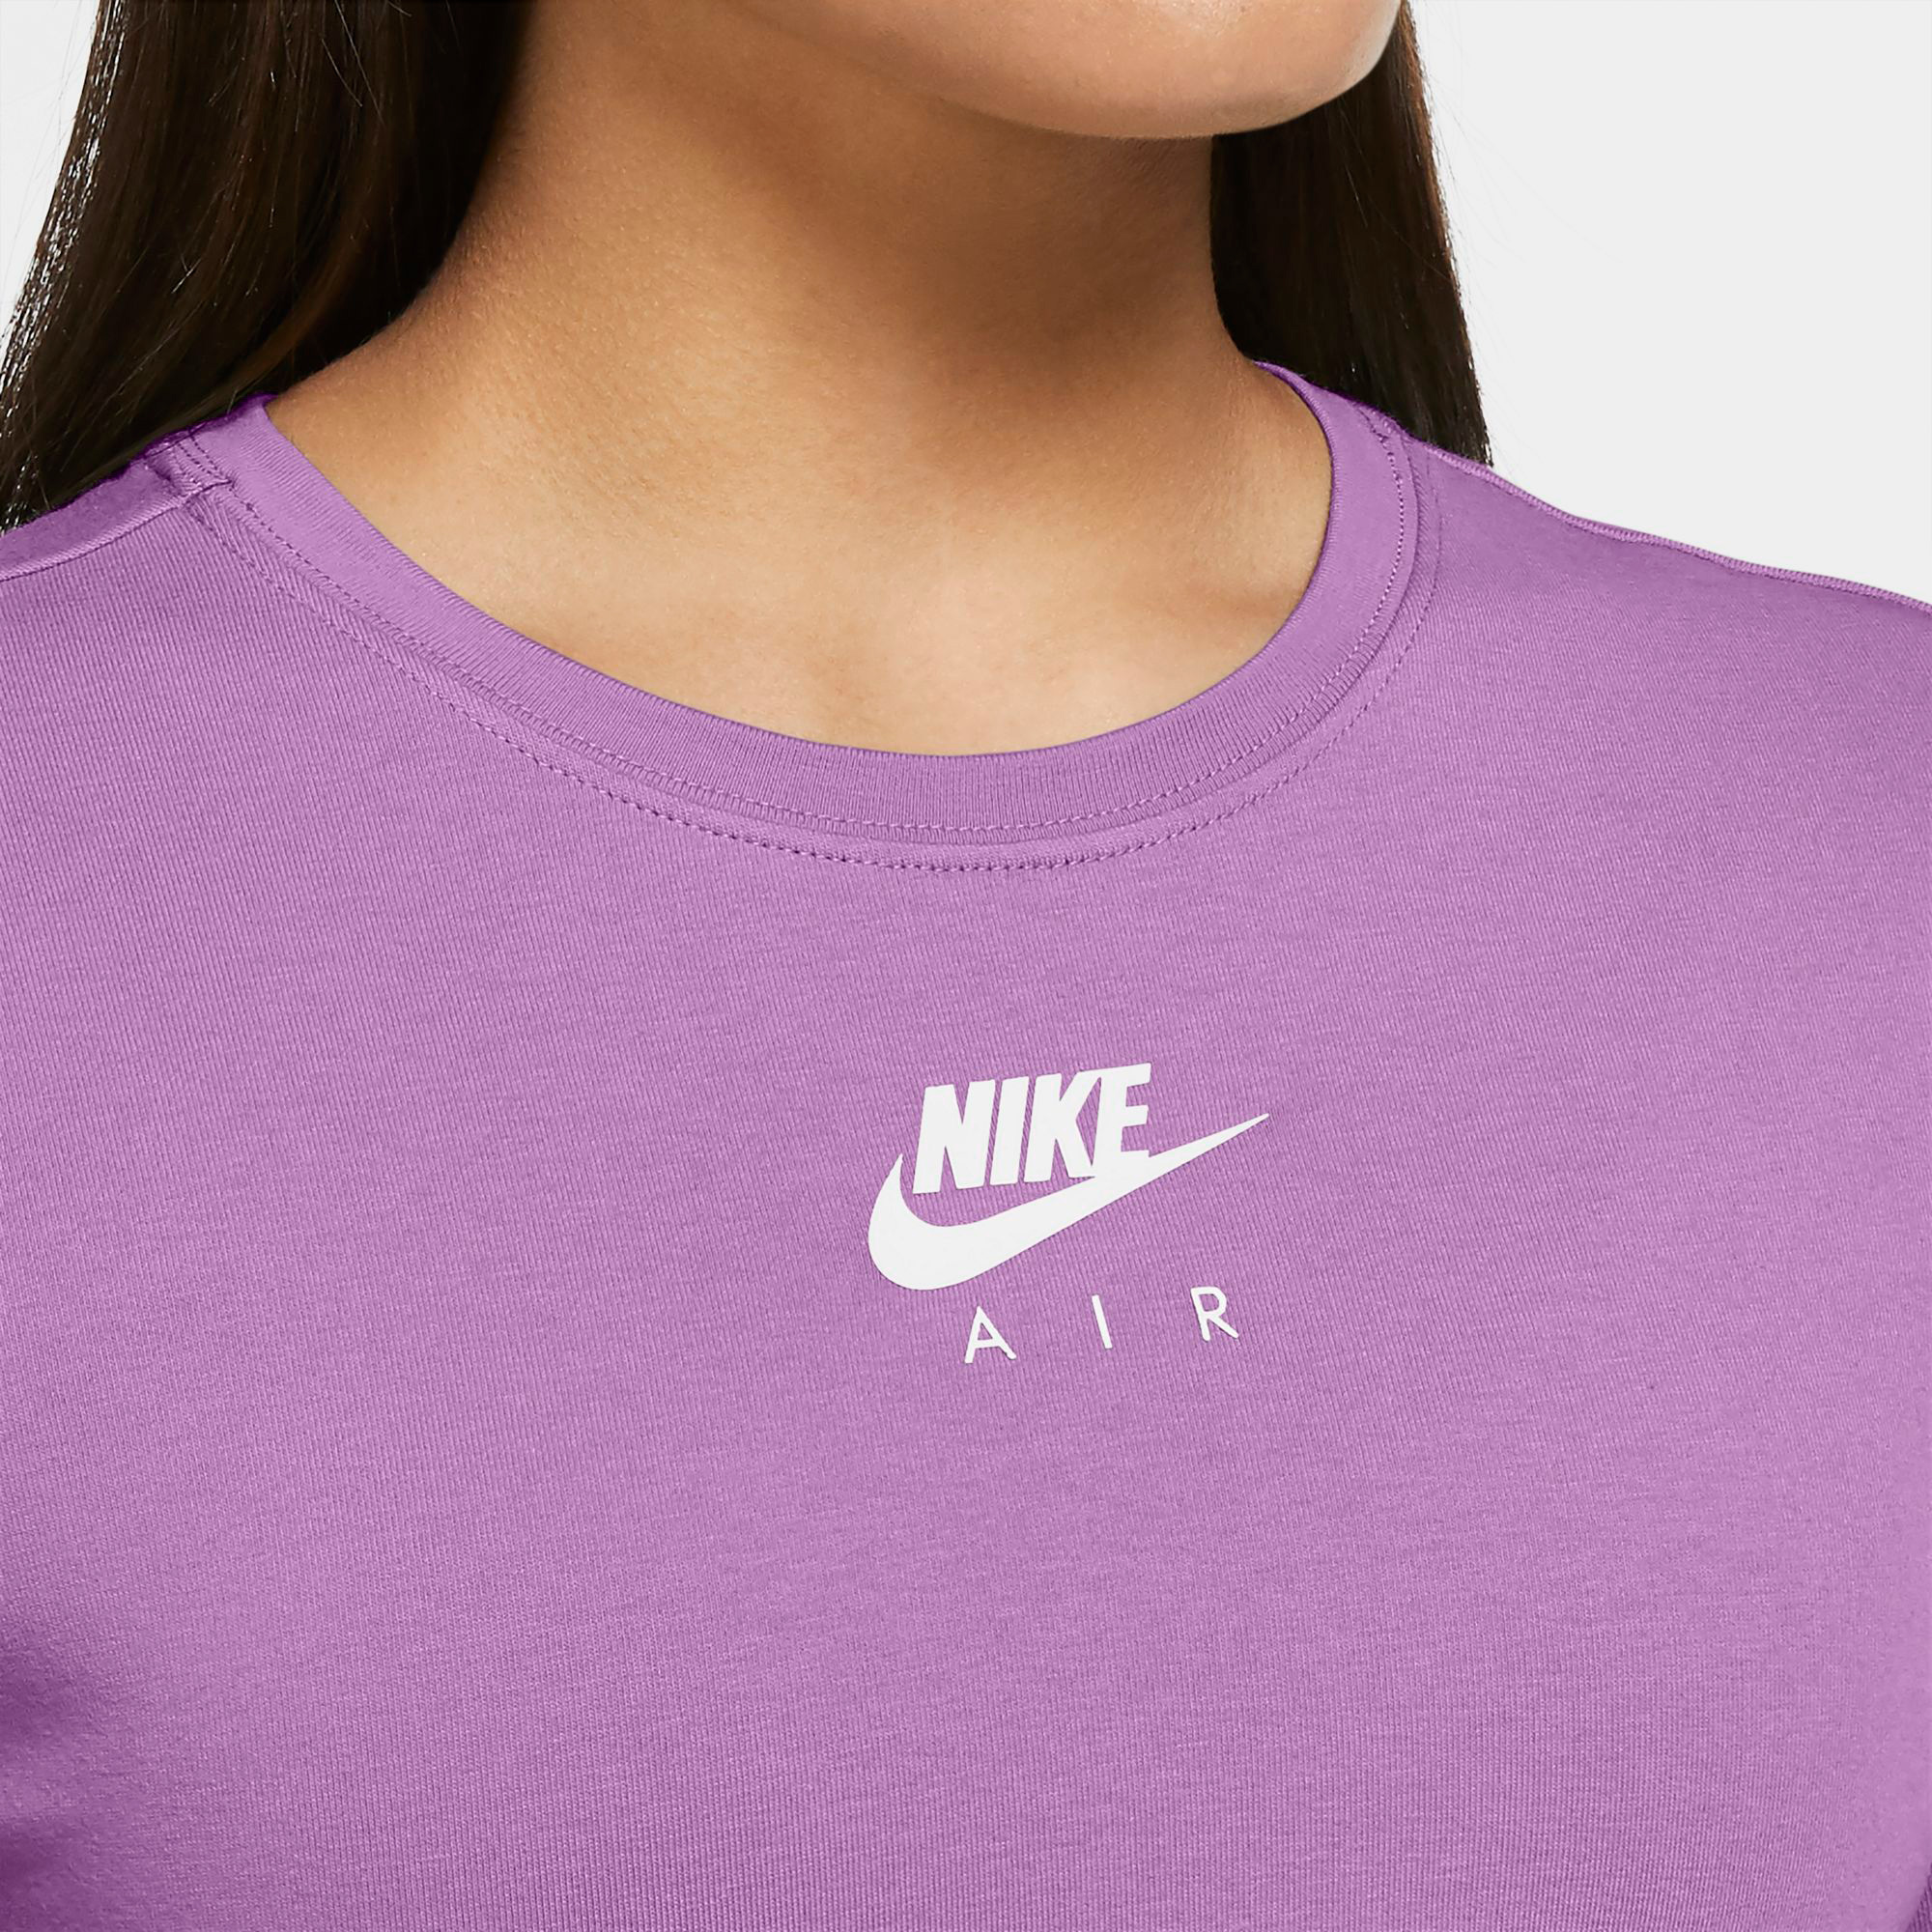 Nike Air Kadın Mor T-Shirt